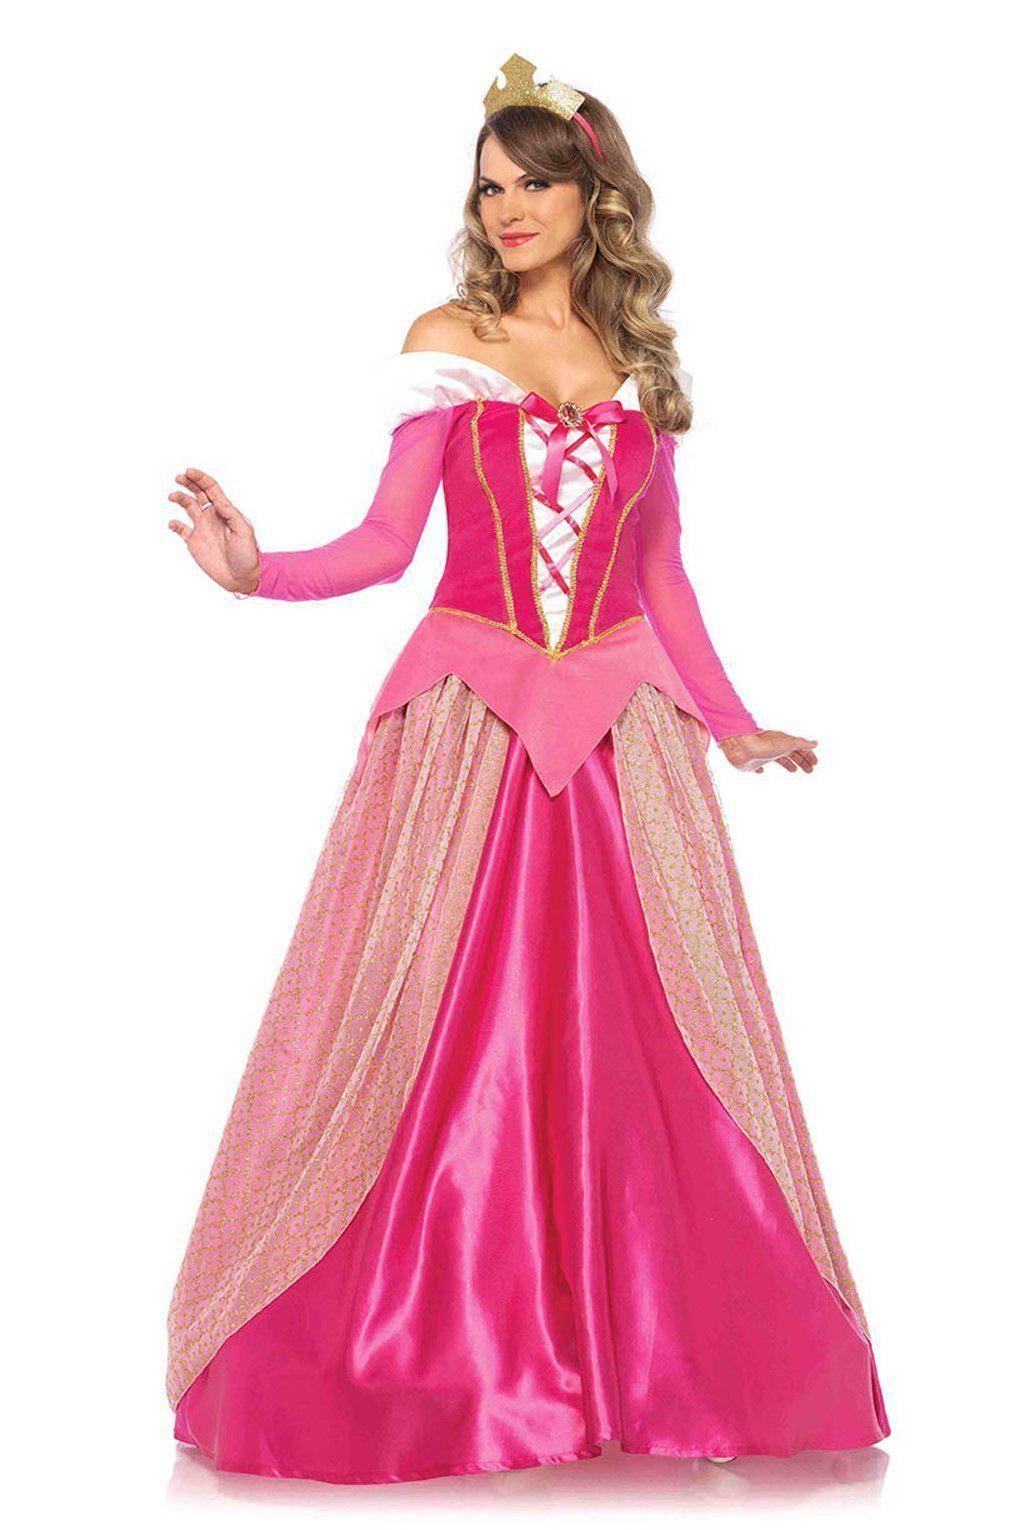 Sleeping Princess Costume-Princess Costumes-Leg Avenue-SEXYSHOES.COM